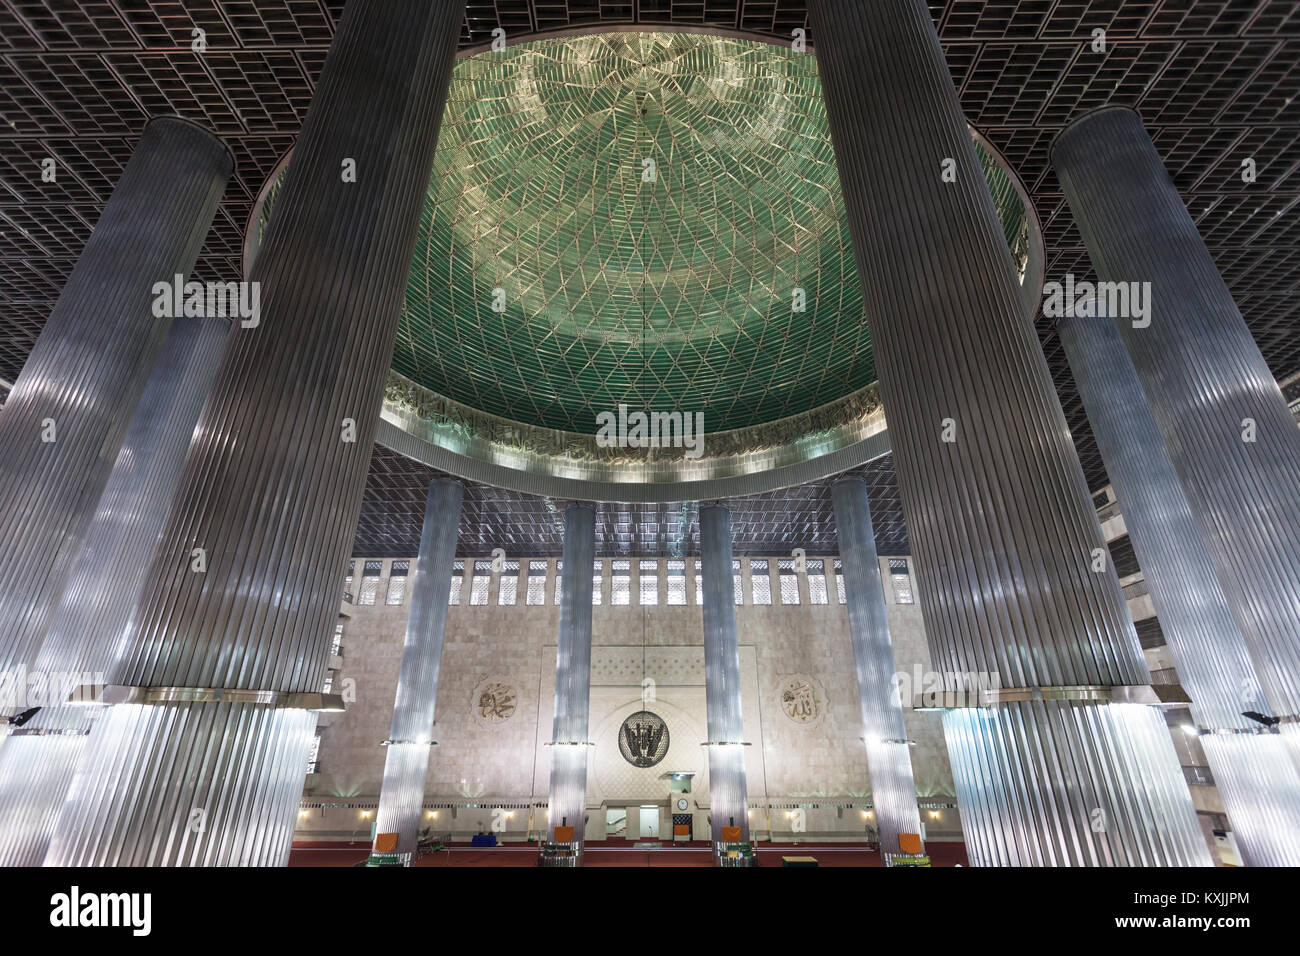 JAKARTA, Indonesia - 19 ottobre 2014: Moschea Istiqlal a Jakarta, Indonesia è la più grande moschea nel sud-est asiatico. Foto Stock